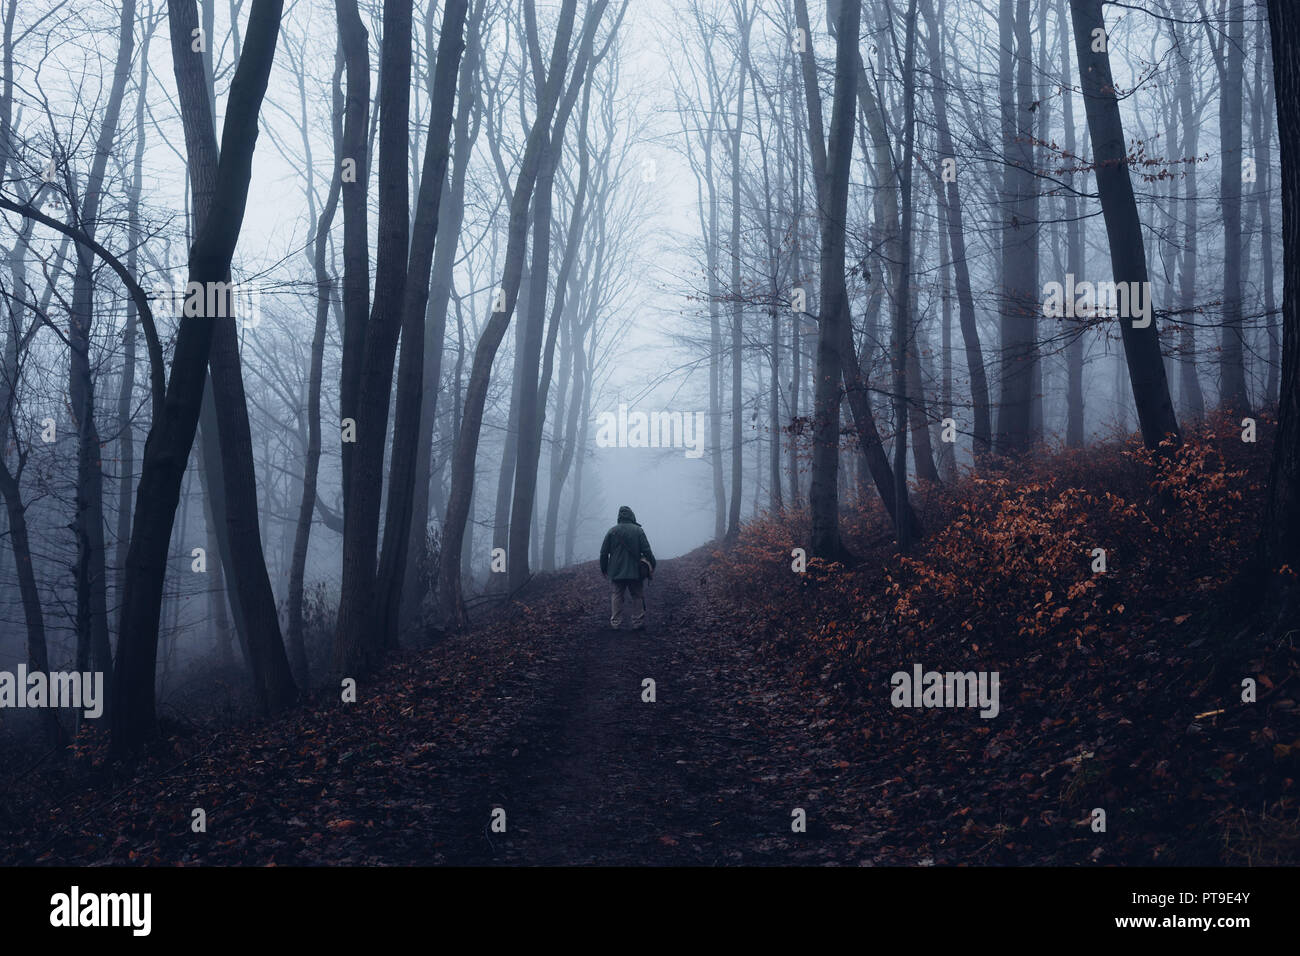 Man standing in a dark misty forest Stock Photo